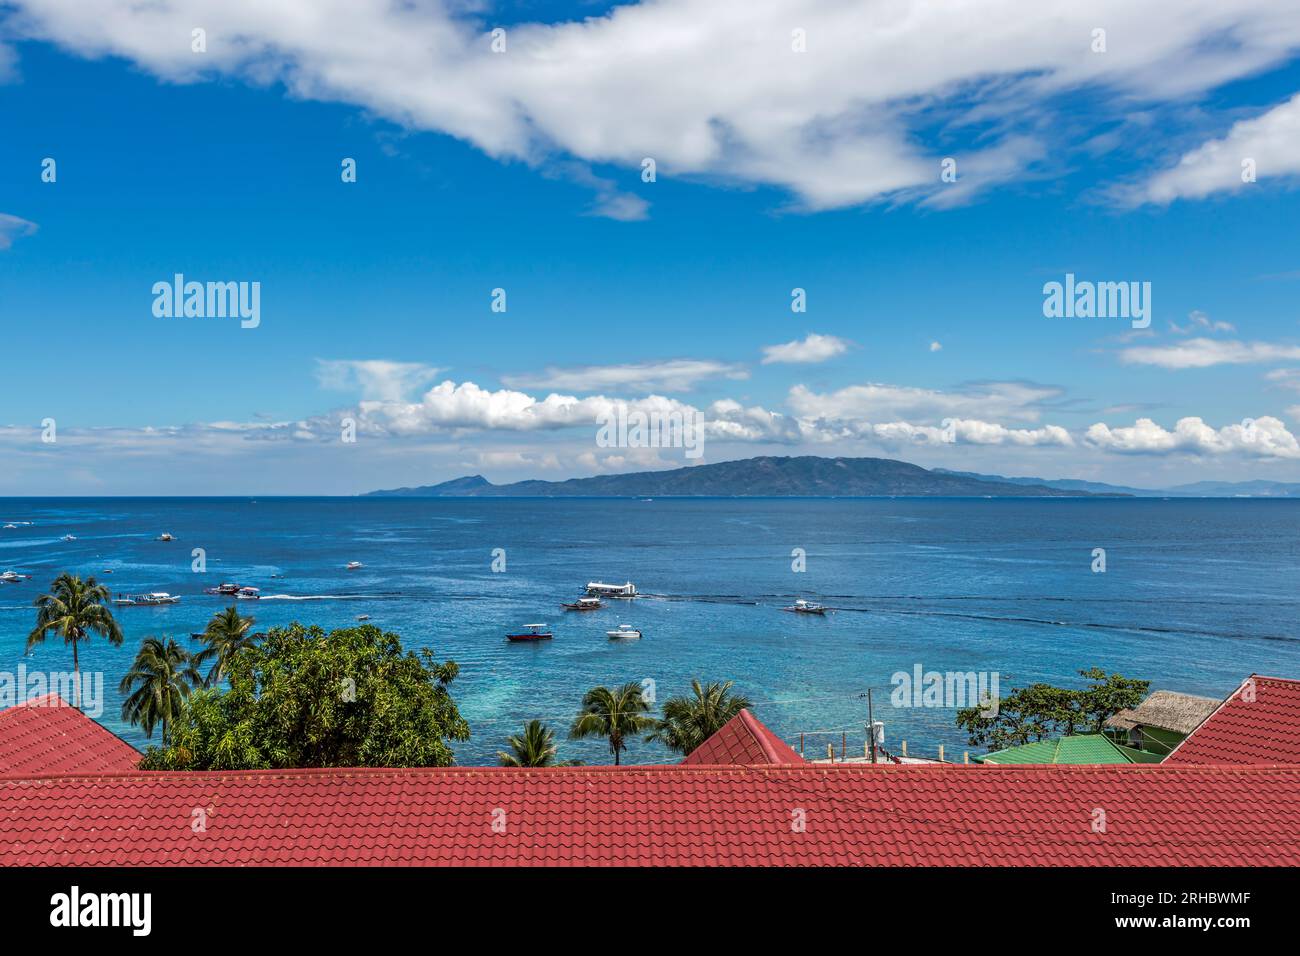 Rooftop view of boats in anchored in ocean, Haligi Beach, Puerto Galera, Mindoro, Philippines Stock Photo